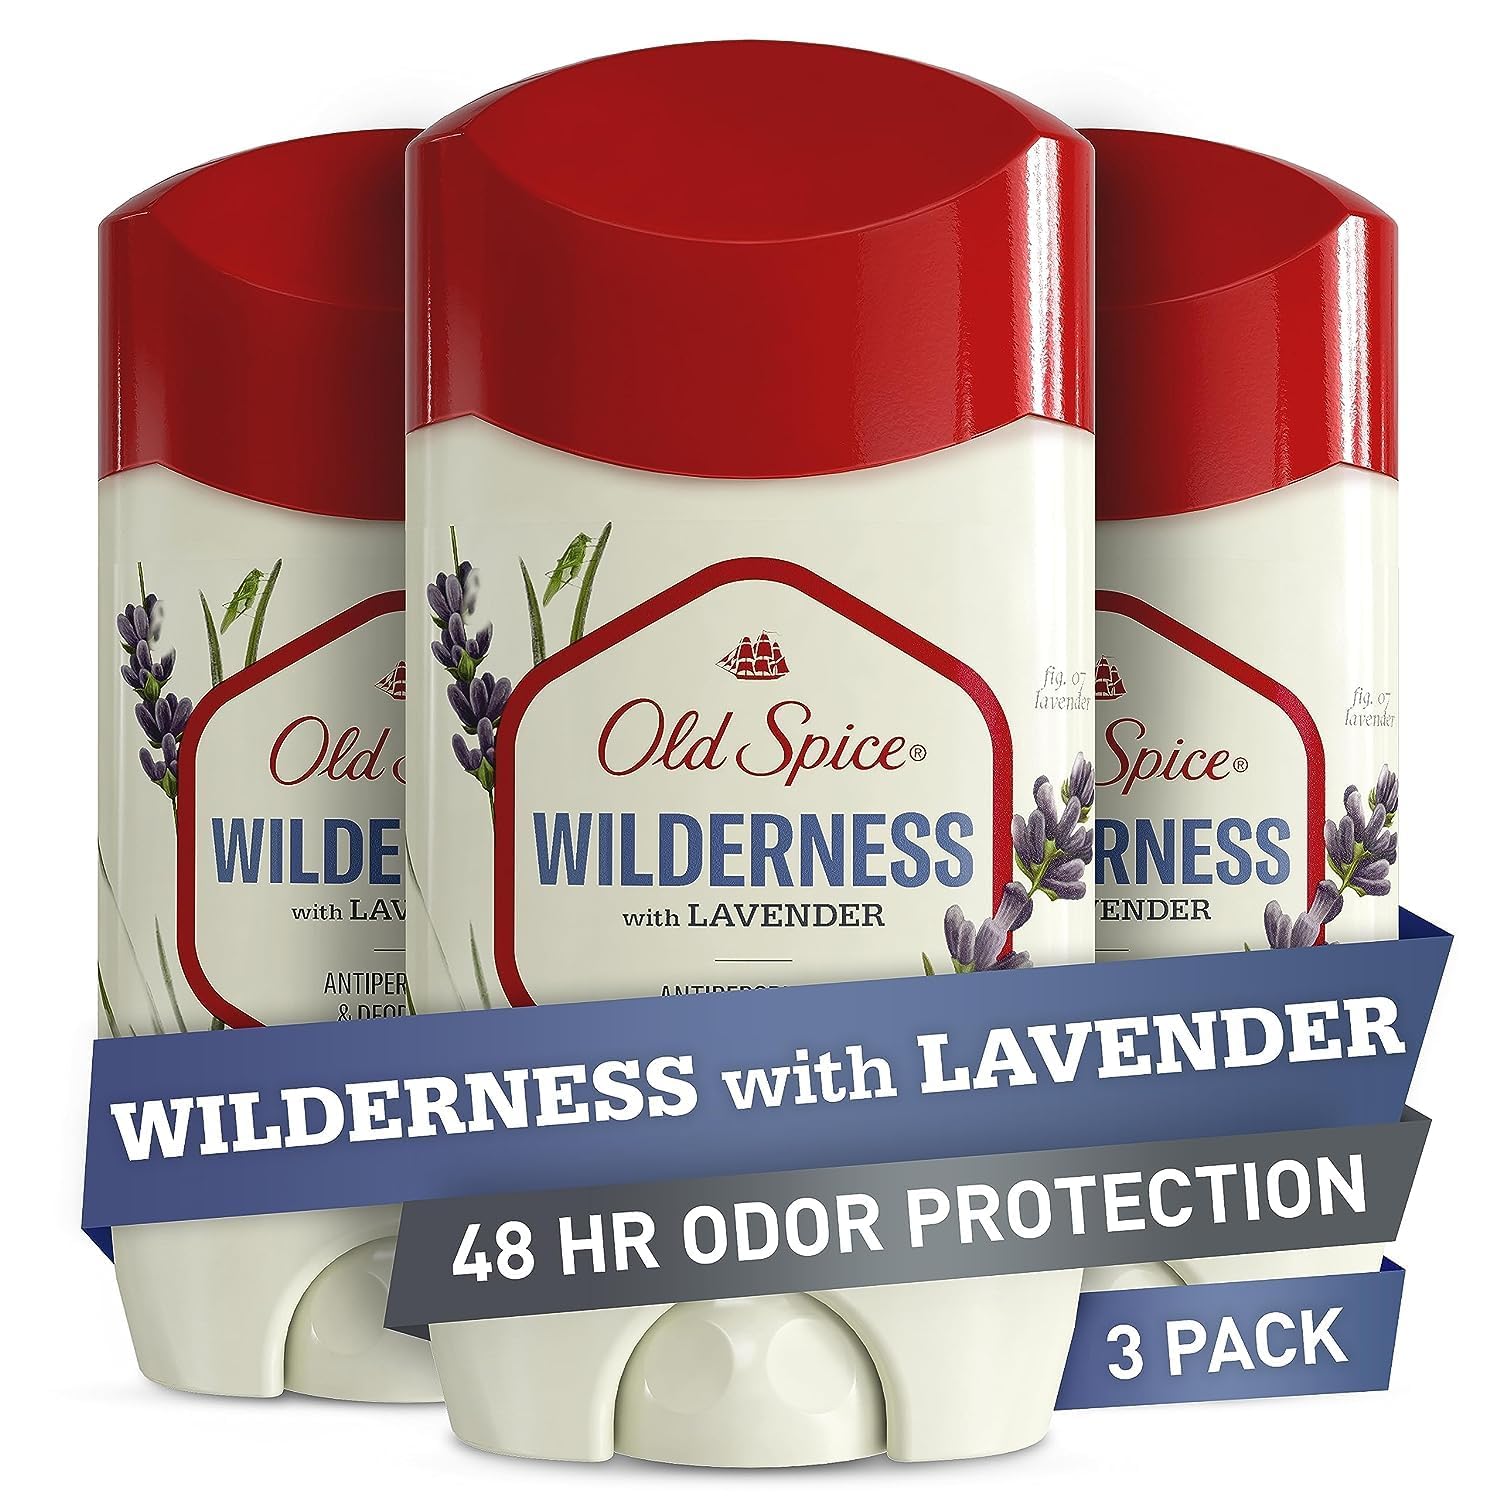 Old Spice Men's Antiperspirant & Deodorant Wilderness with Lavender, 2.6oz, (Pack of 3)